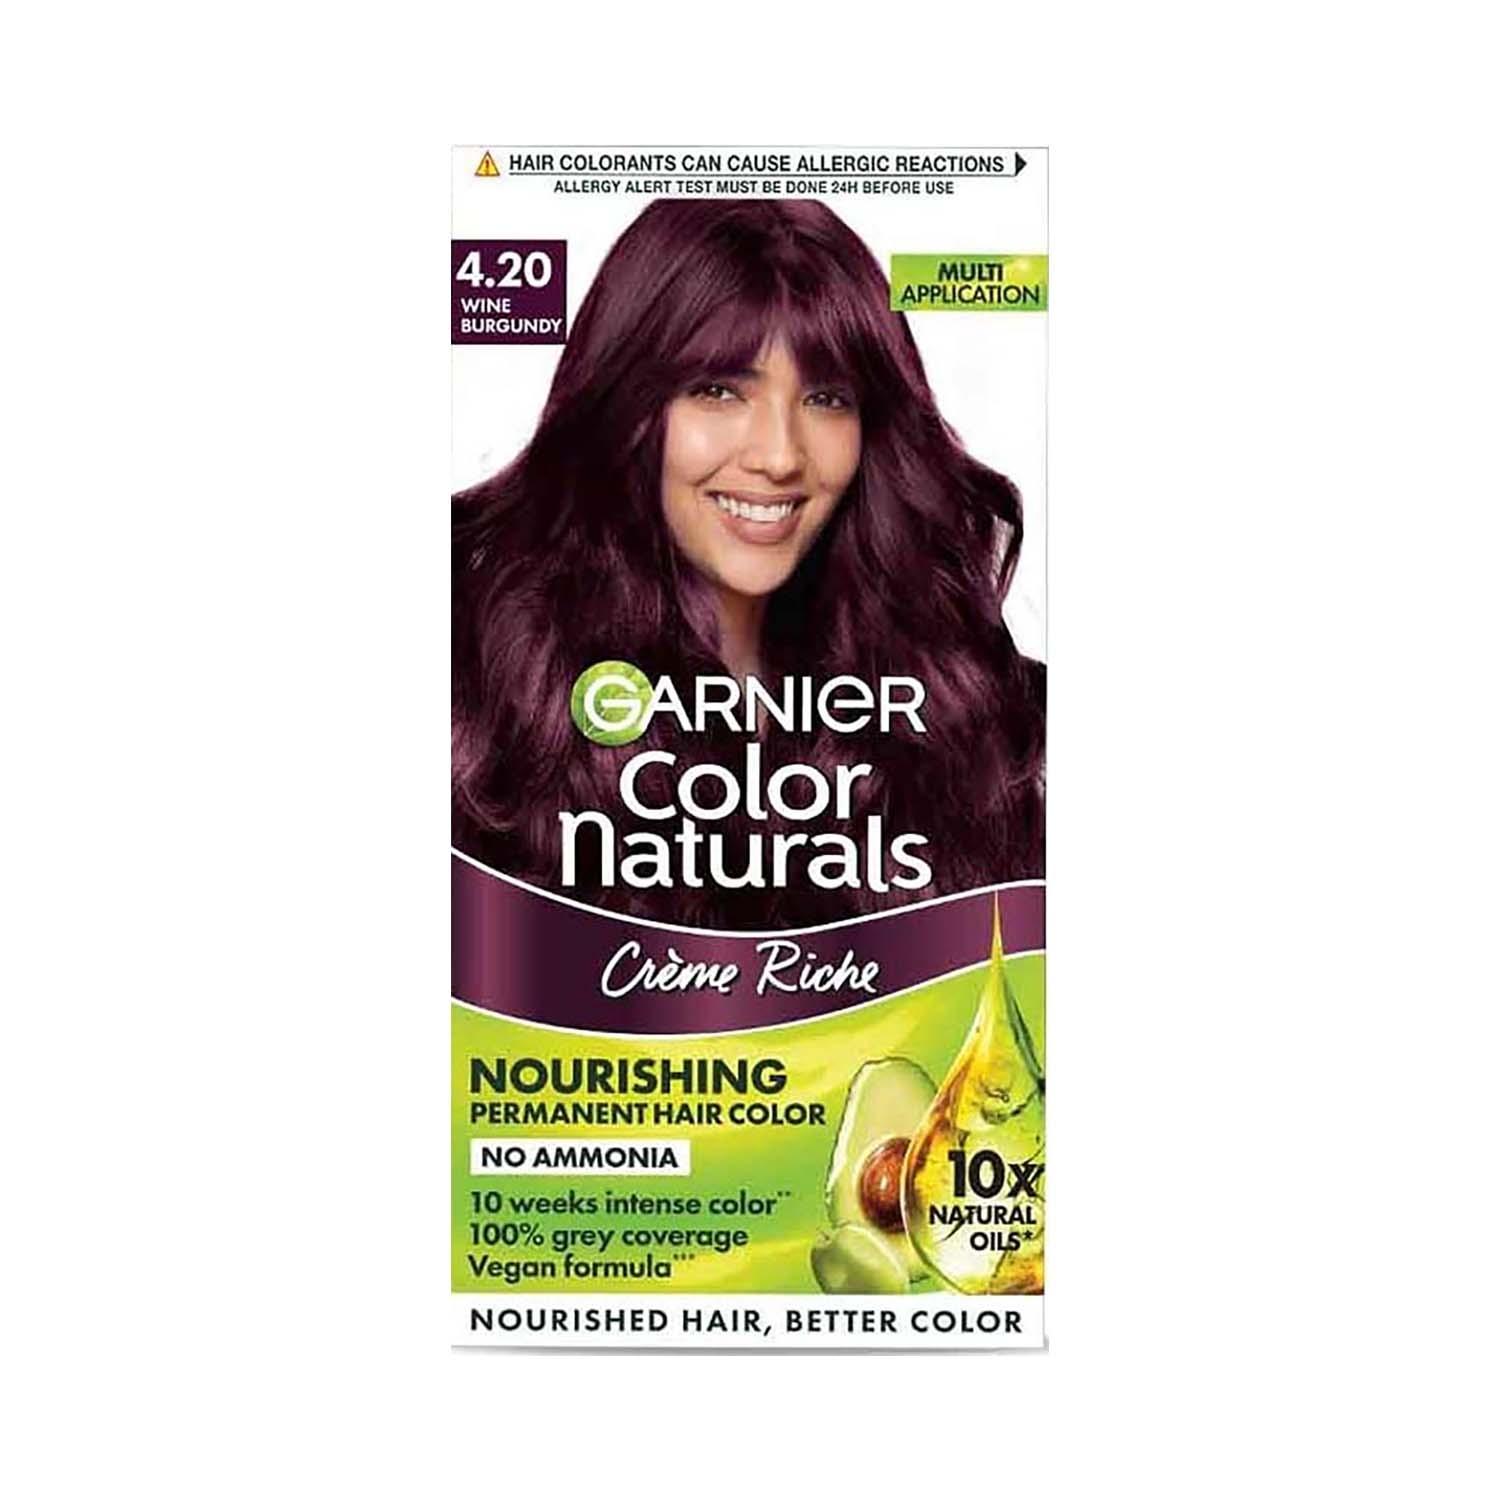 garnier color naturals creme riche hair color - 4.20 wine burgundy (70ml+60g)